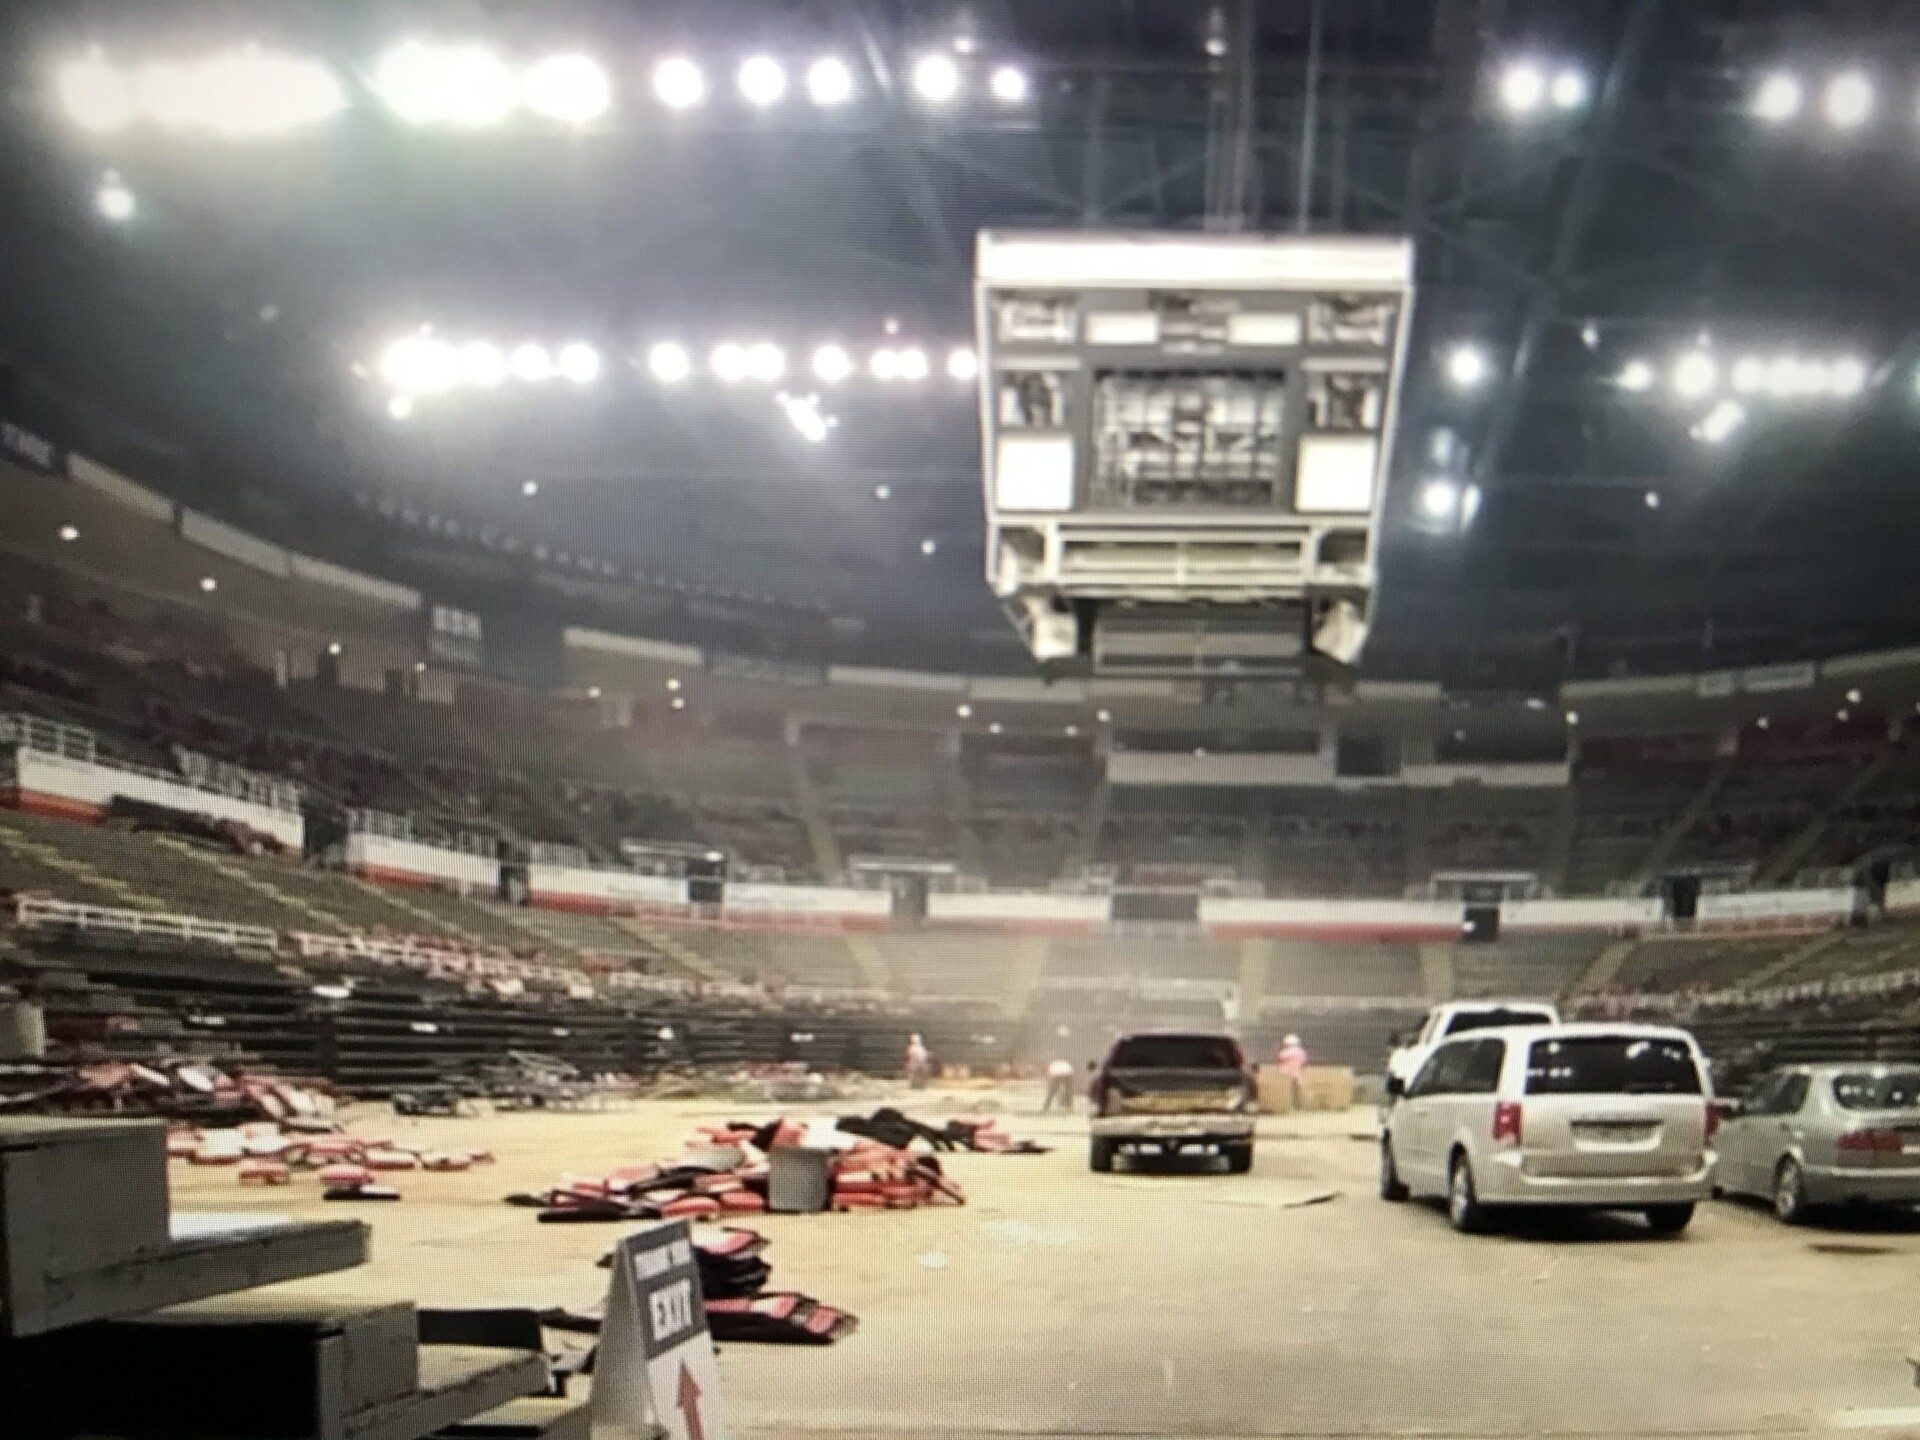 [OC] Another look inside the Joe Louis Arena